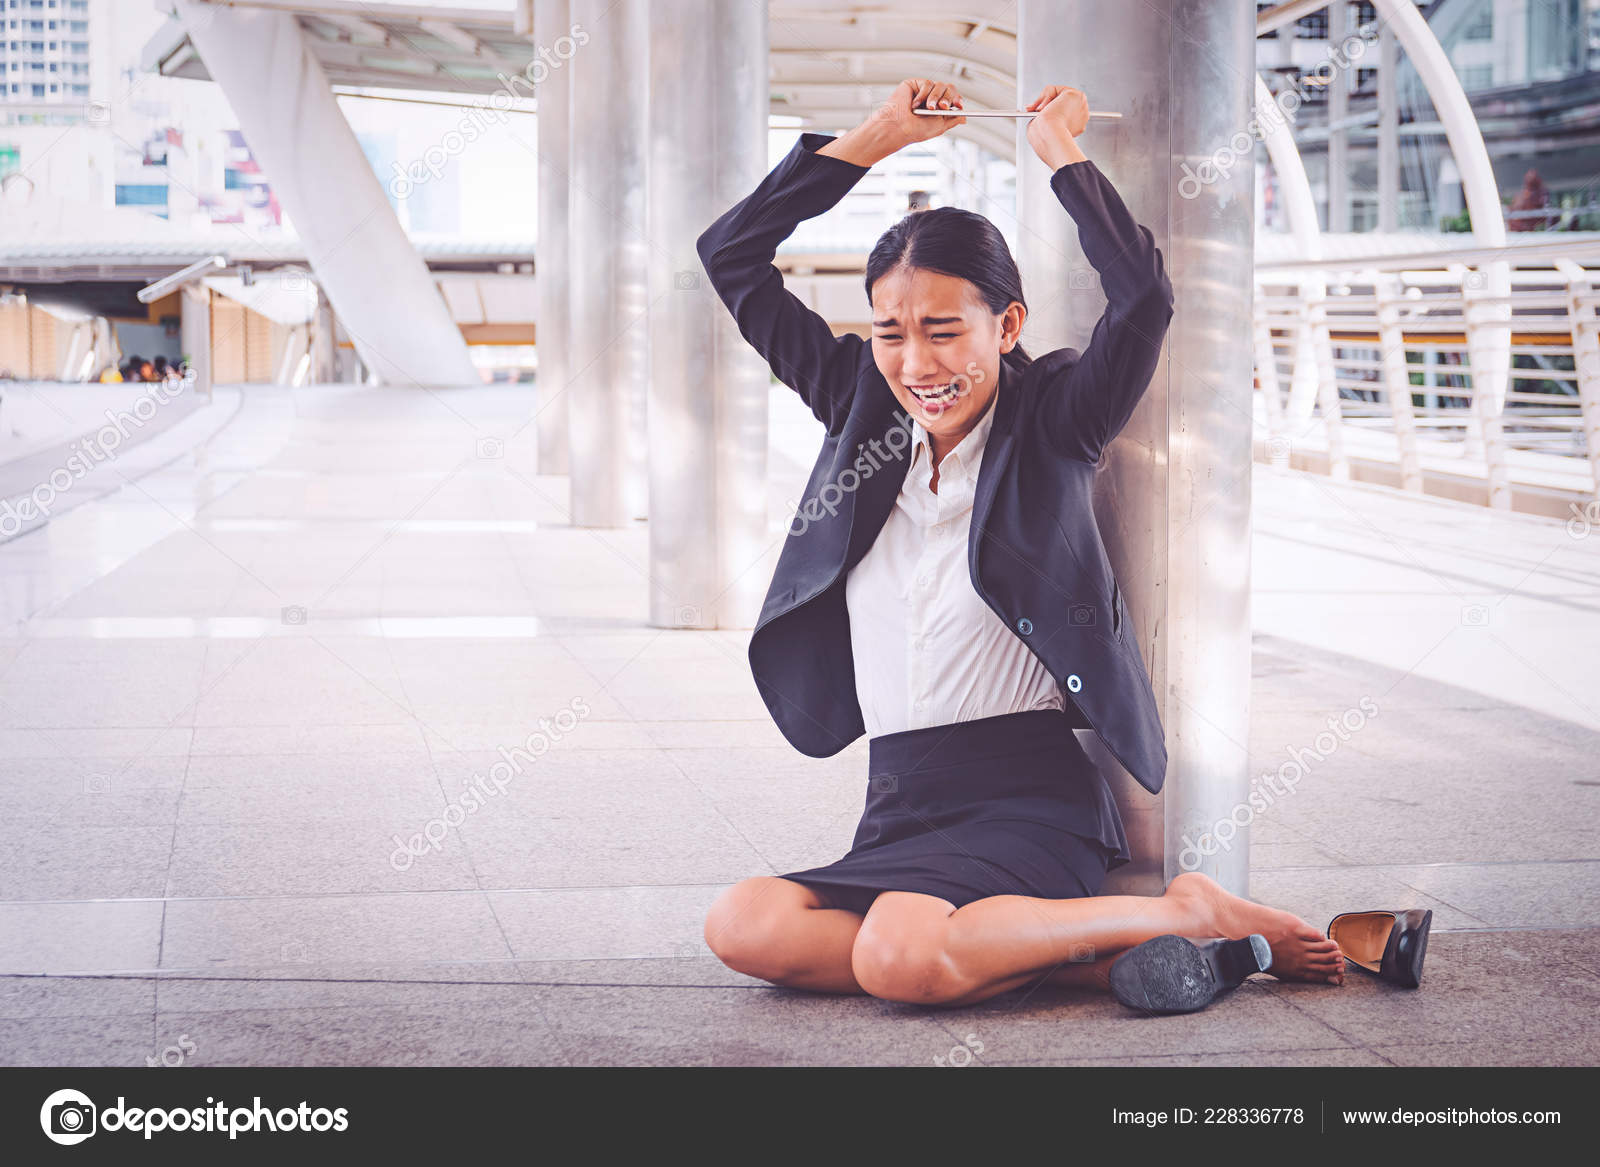 https://st4.depositphotos.com/3447011/22833/i/1600/depositphotos_228336778-stock-photo-young-depressed-businesswoman-sitting-floor.jpg